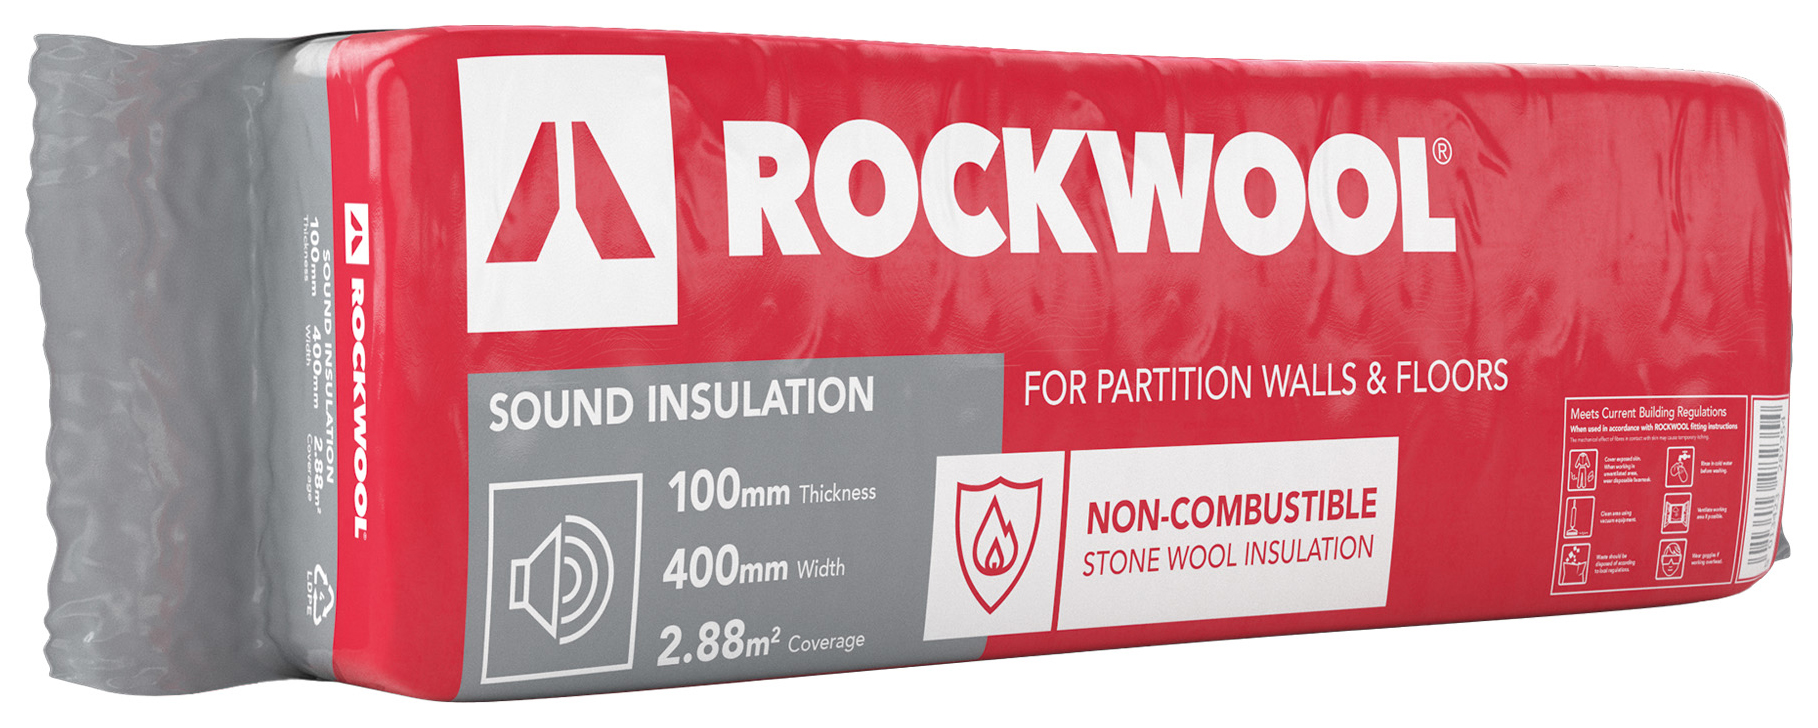 Rockwool Sound Insulation Slab - 100 x 400 x 1200mm